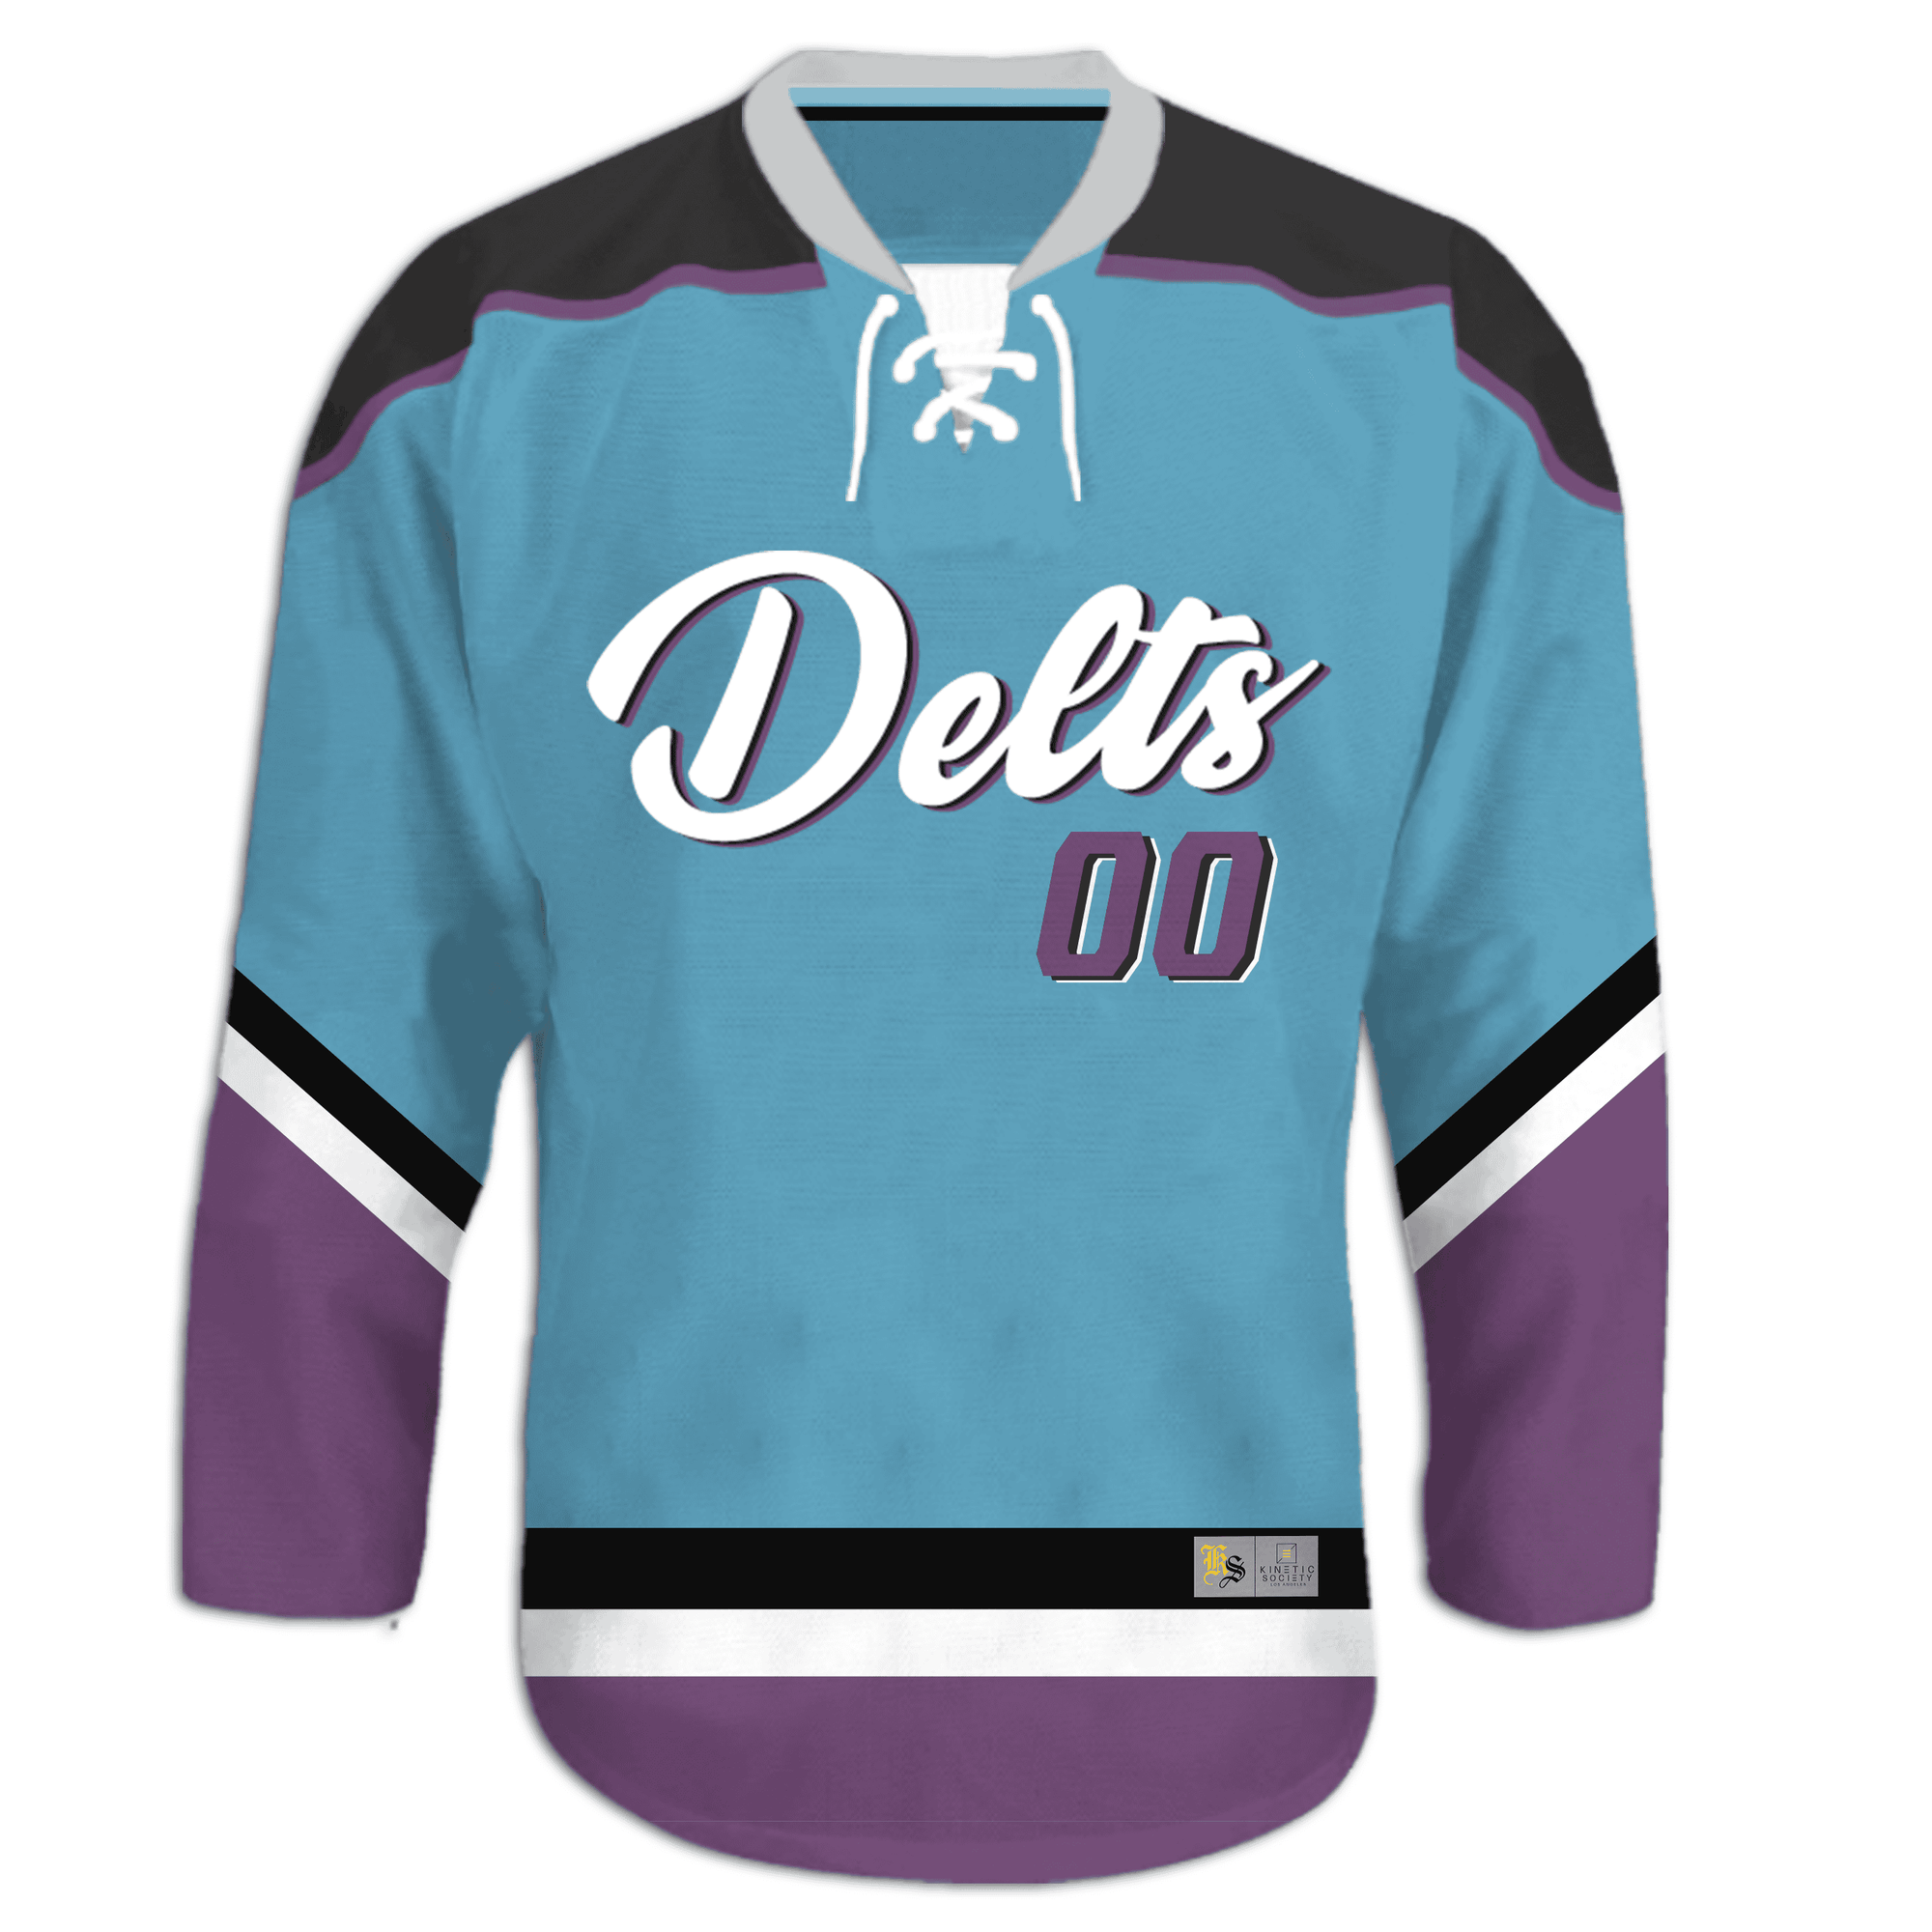 Delta Tau Delta - Kratos Hockey Jersey